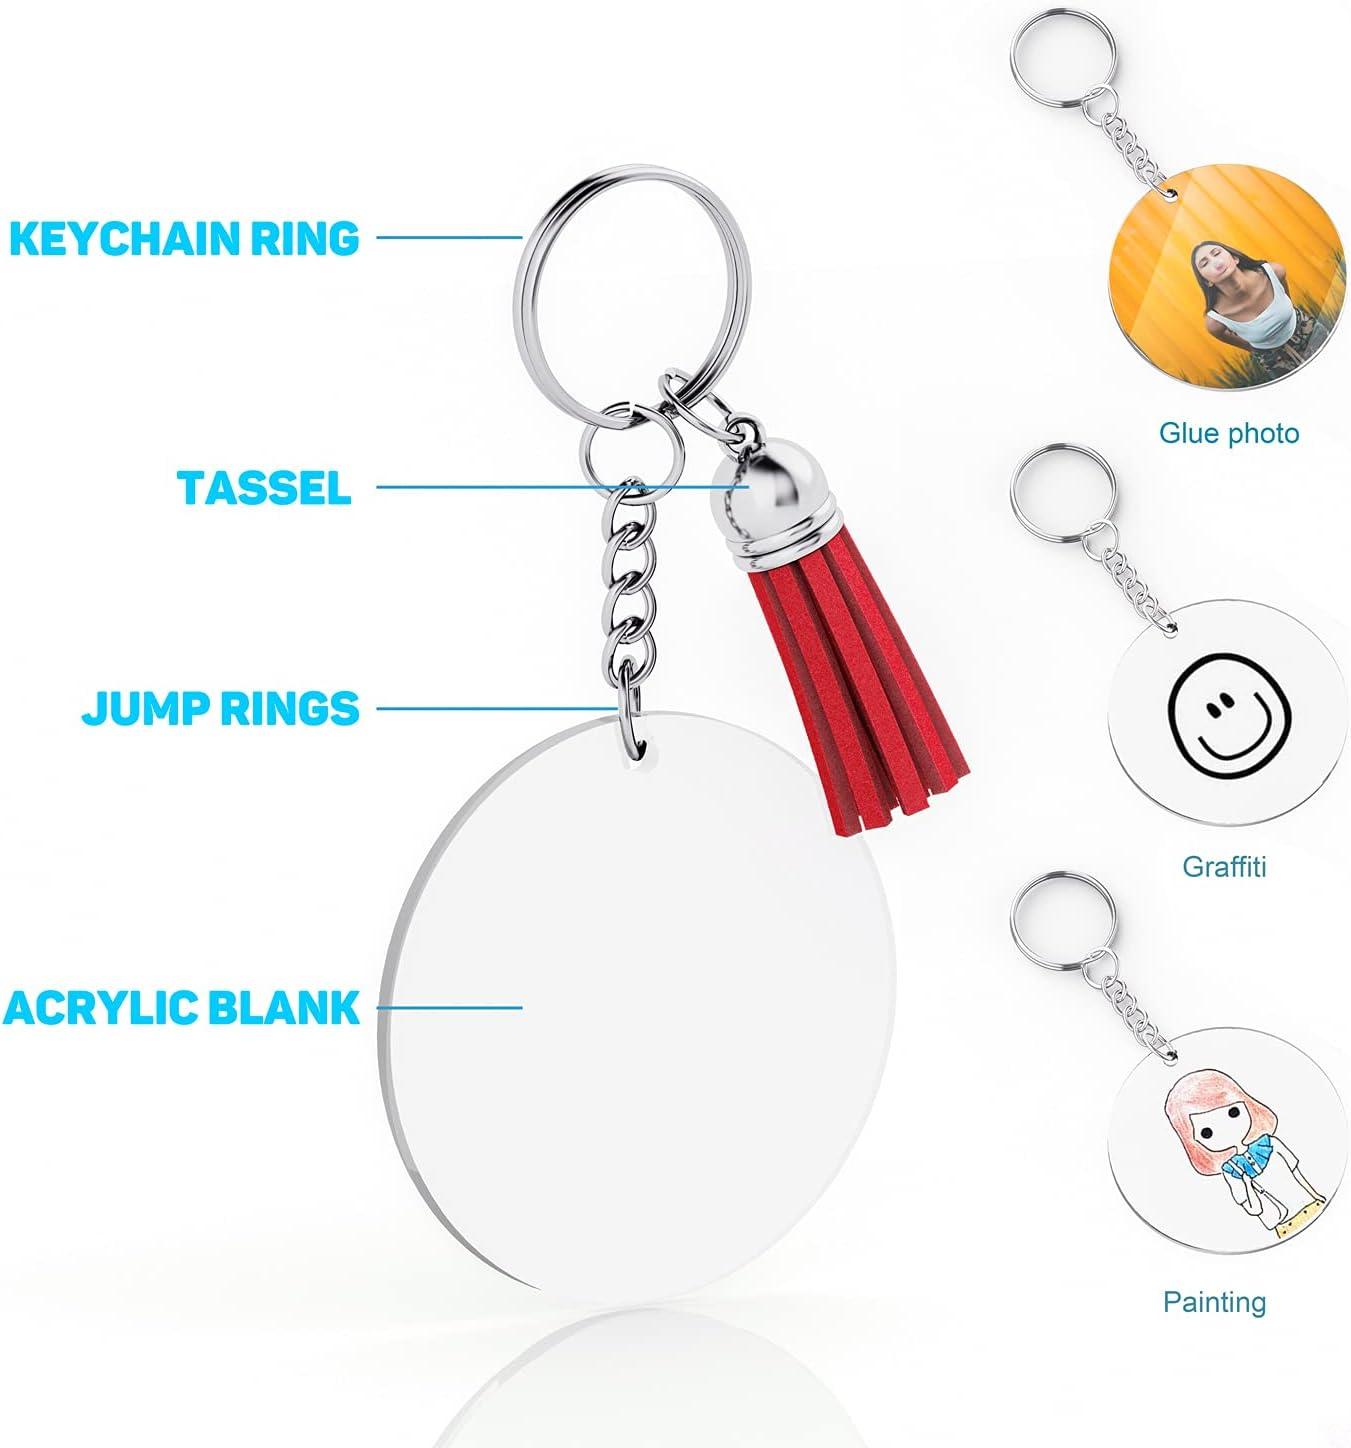 JIARON Acrylic Blank Keychains 200Pcs Acrylic Blank Keychain kits with 50  Pcs Acrylic Keychain Blanks 50 Pcs Keychain Tassels 50 Pcs Key Rings with  Chain and 50 Pcs Jump Rings for DIY Keychain